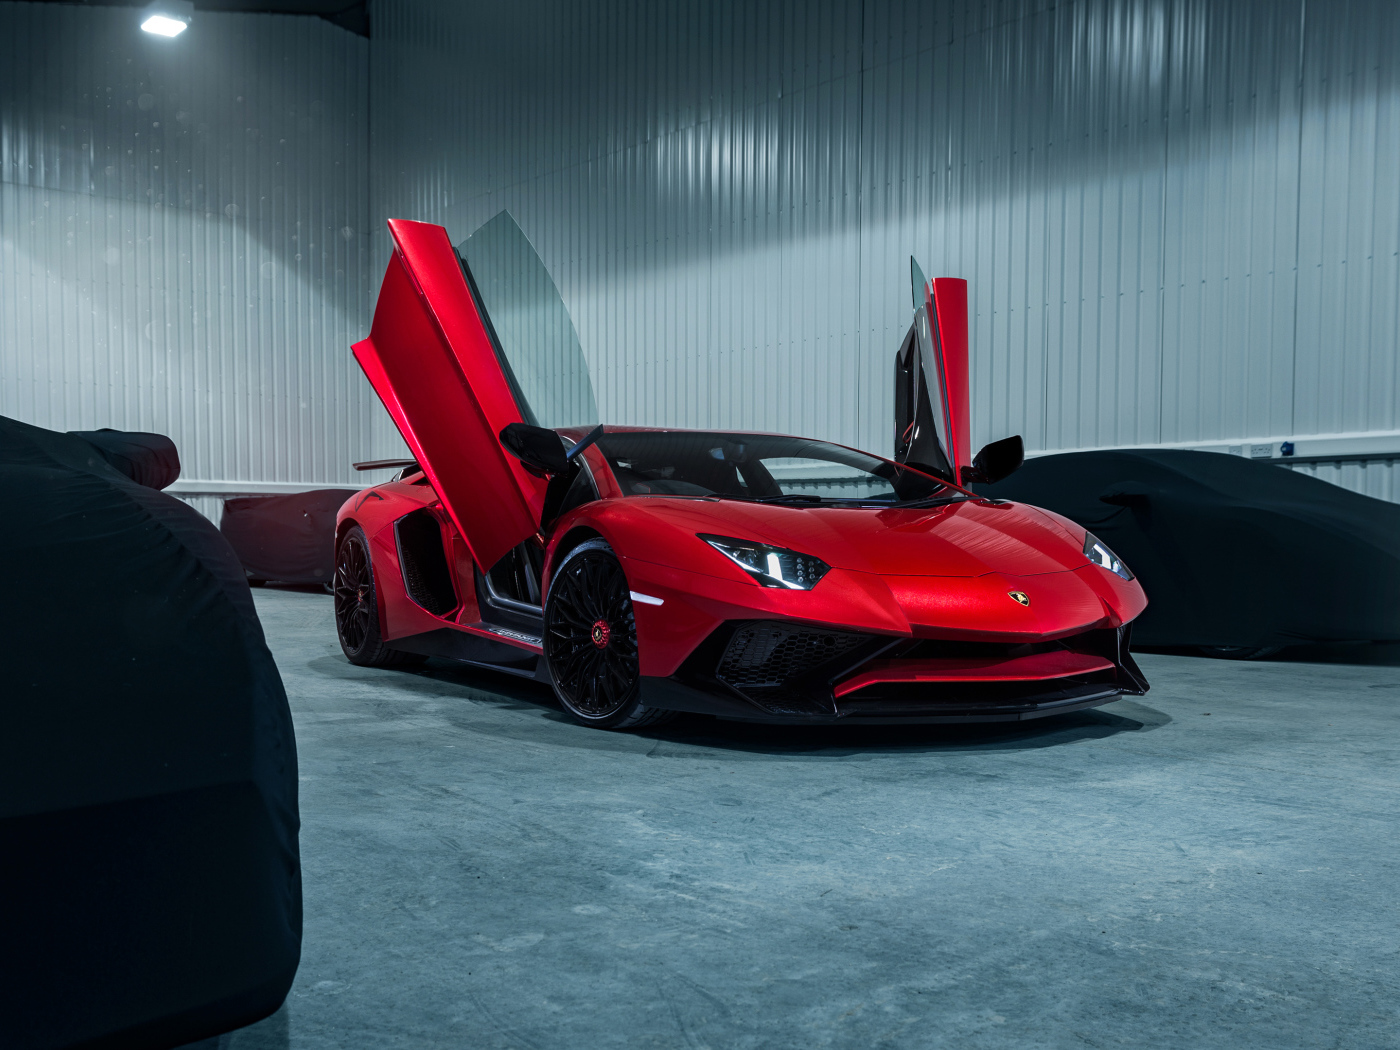 Red car Lamborghini Aventador SV with open doors